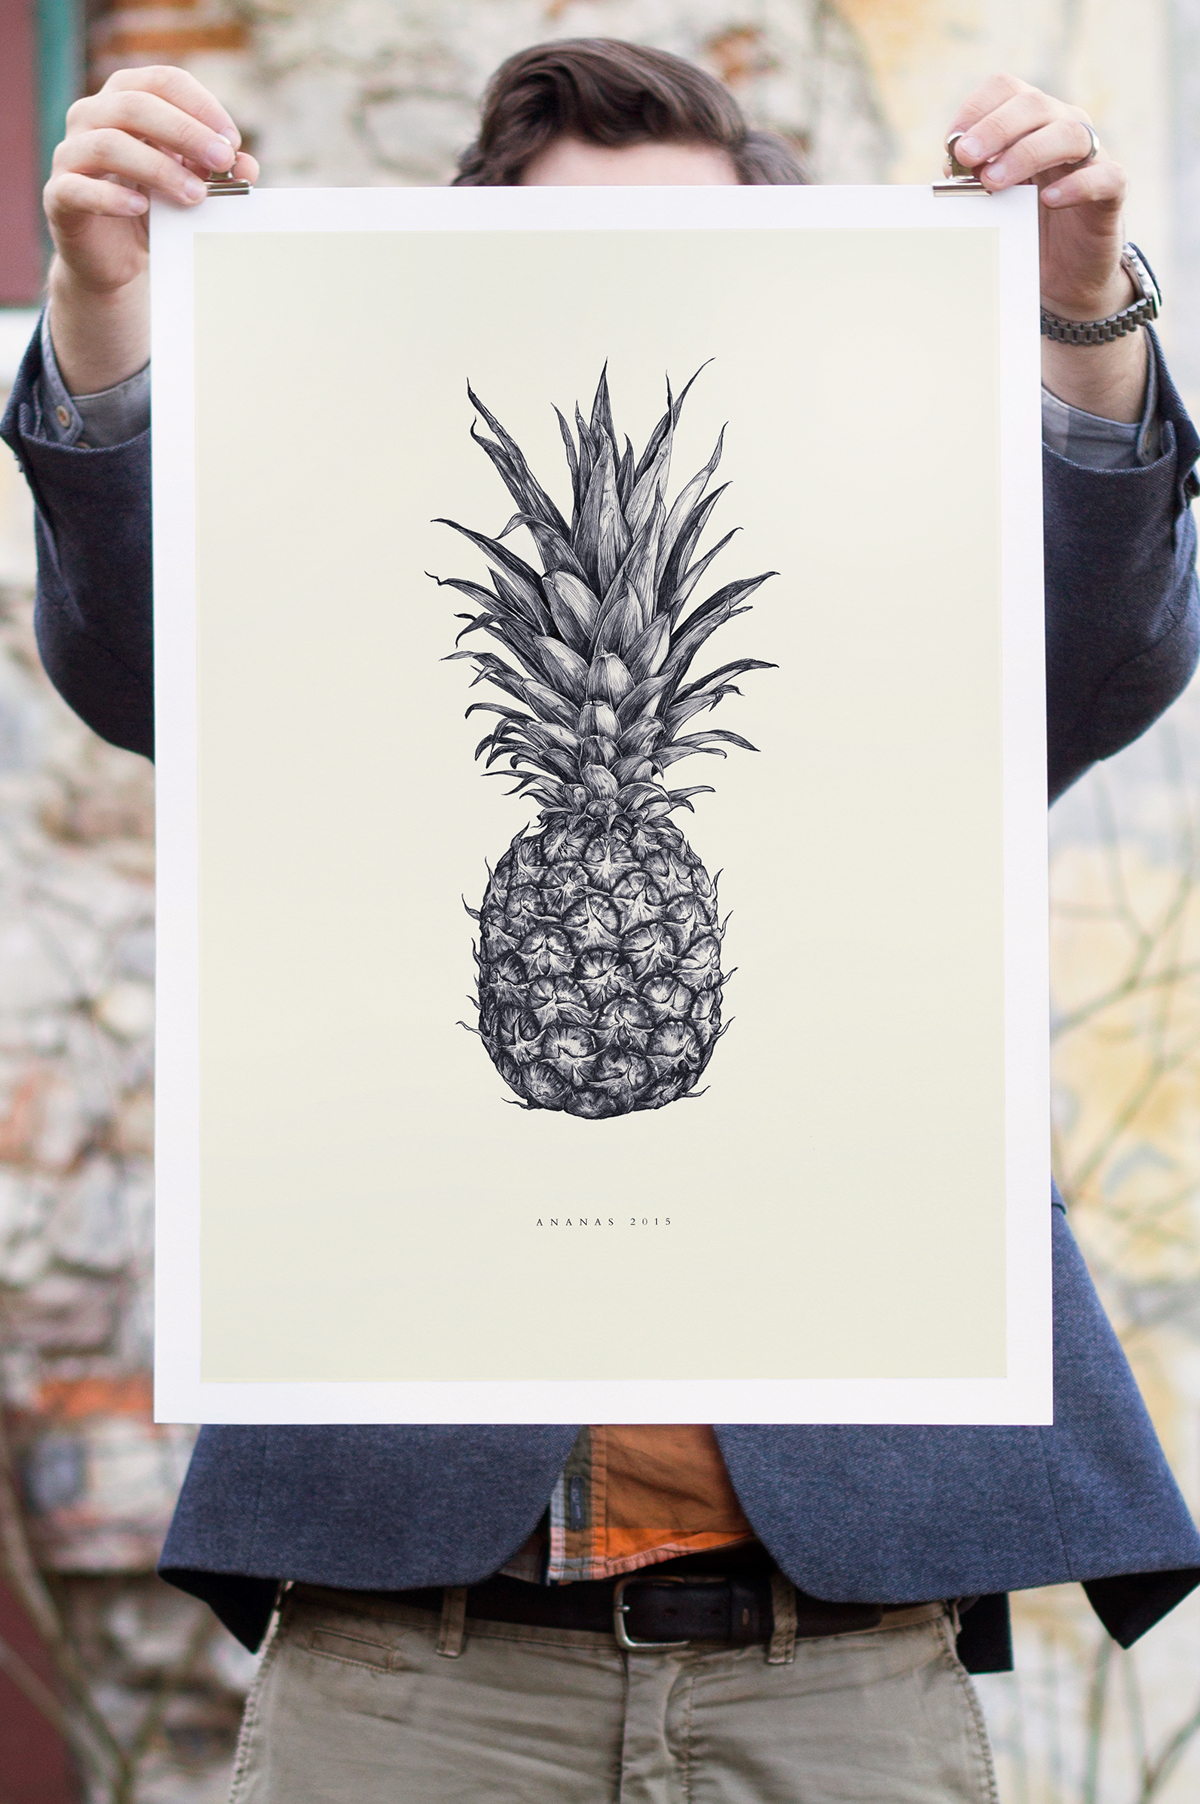 pine cone elephant prints artwork poster ball pen Prints 2015 nest ballpoint